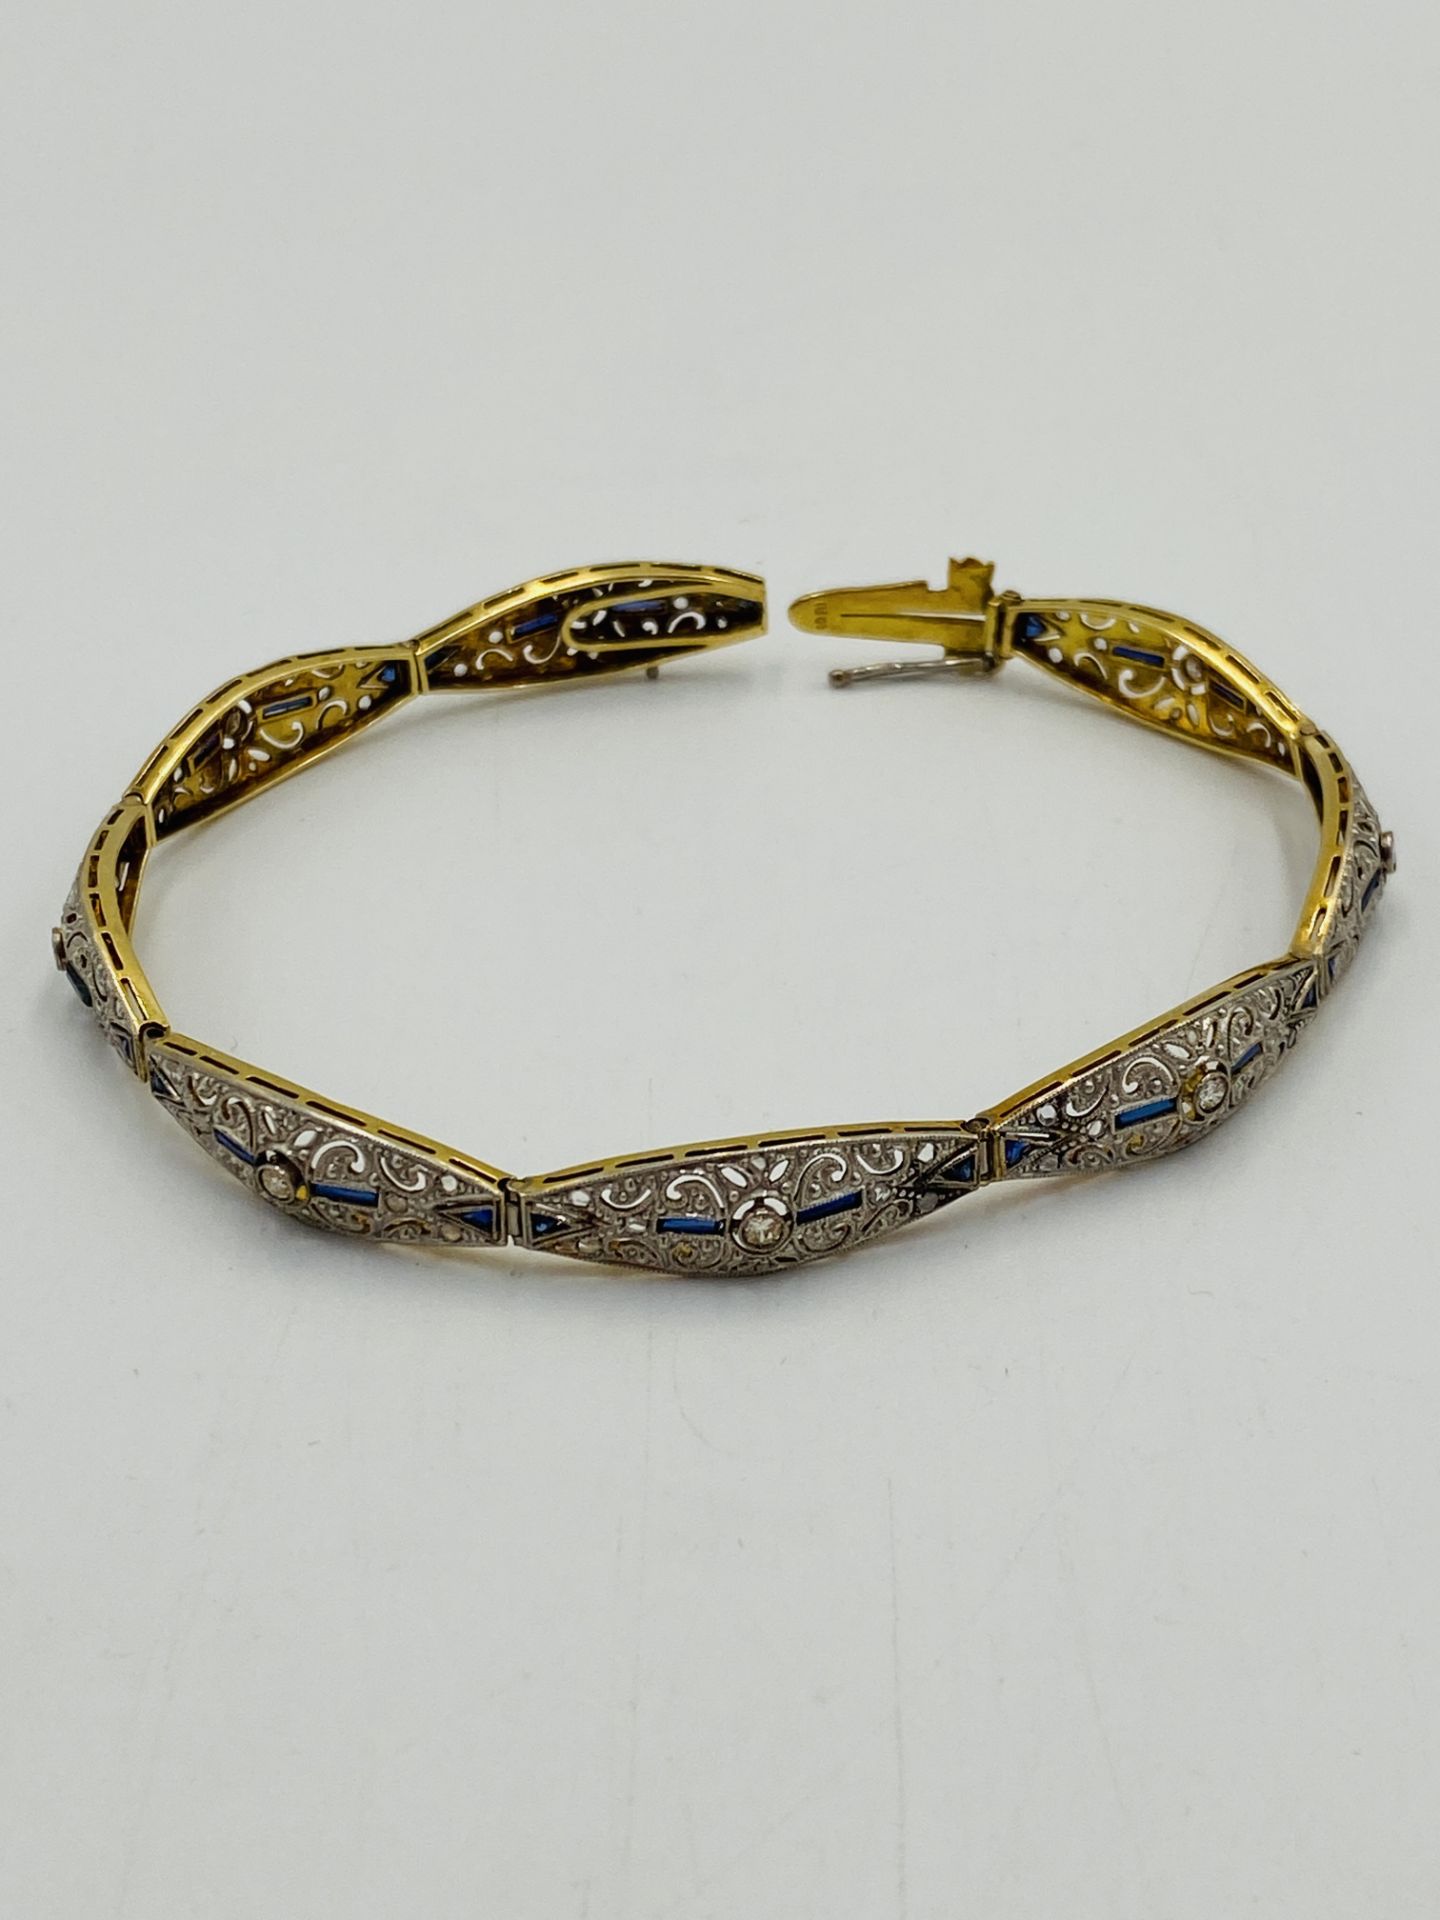 18ct gold, sapphire and diamond bracelet - Image 5 of 6